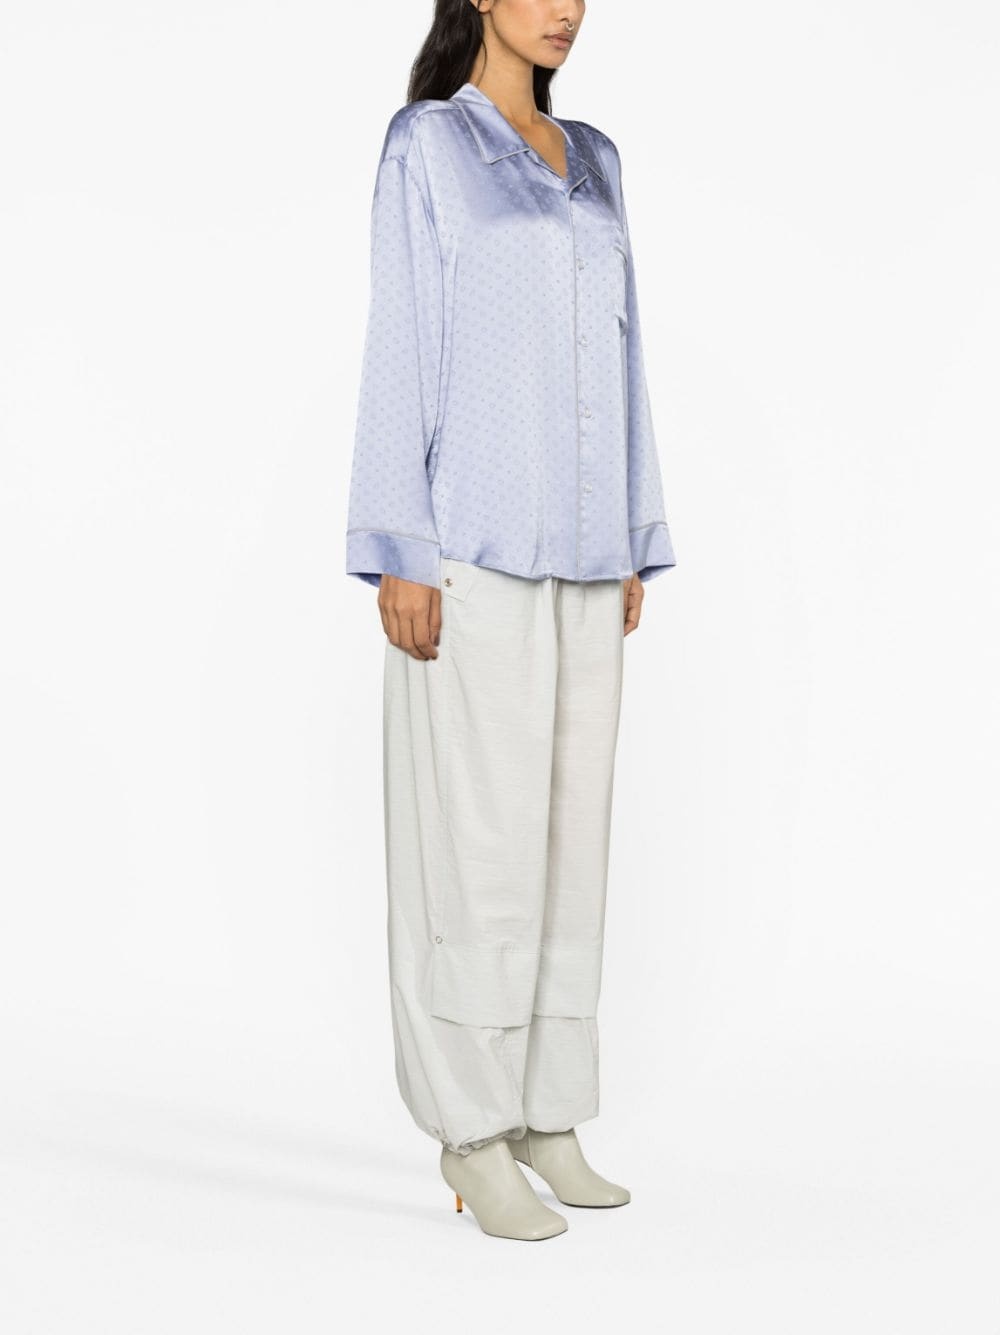 Alexander Wang Pajama Shirt In Silk Paisley Jacquard in Blue